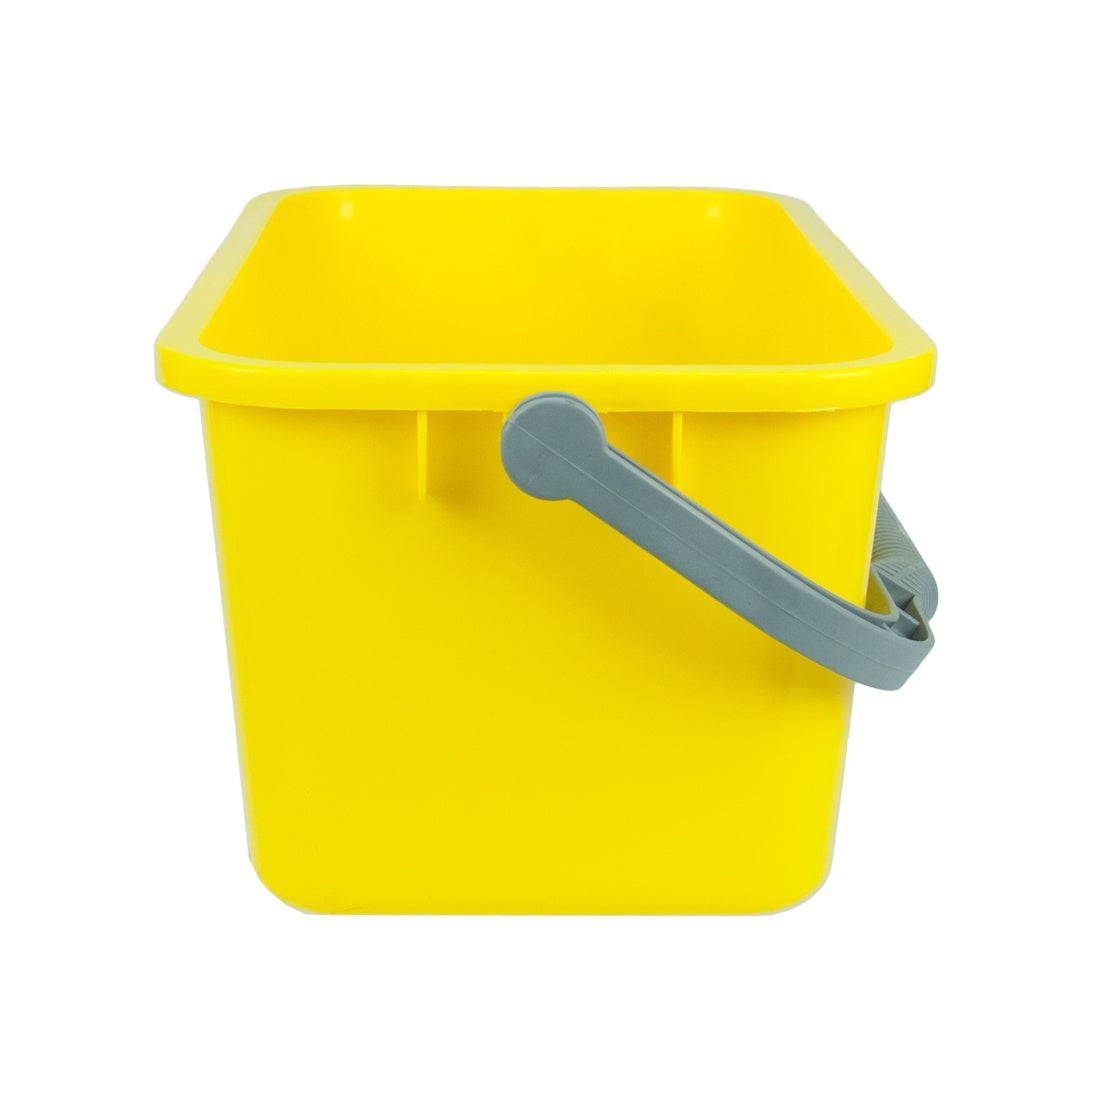 Window Cleaning Supplies  Ettore Buckets - Super Compact Bucket